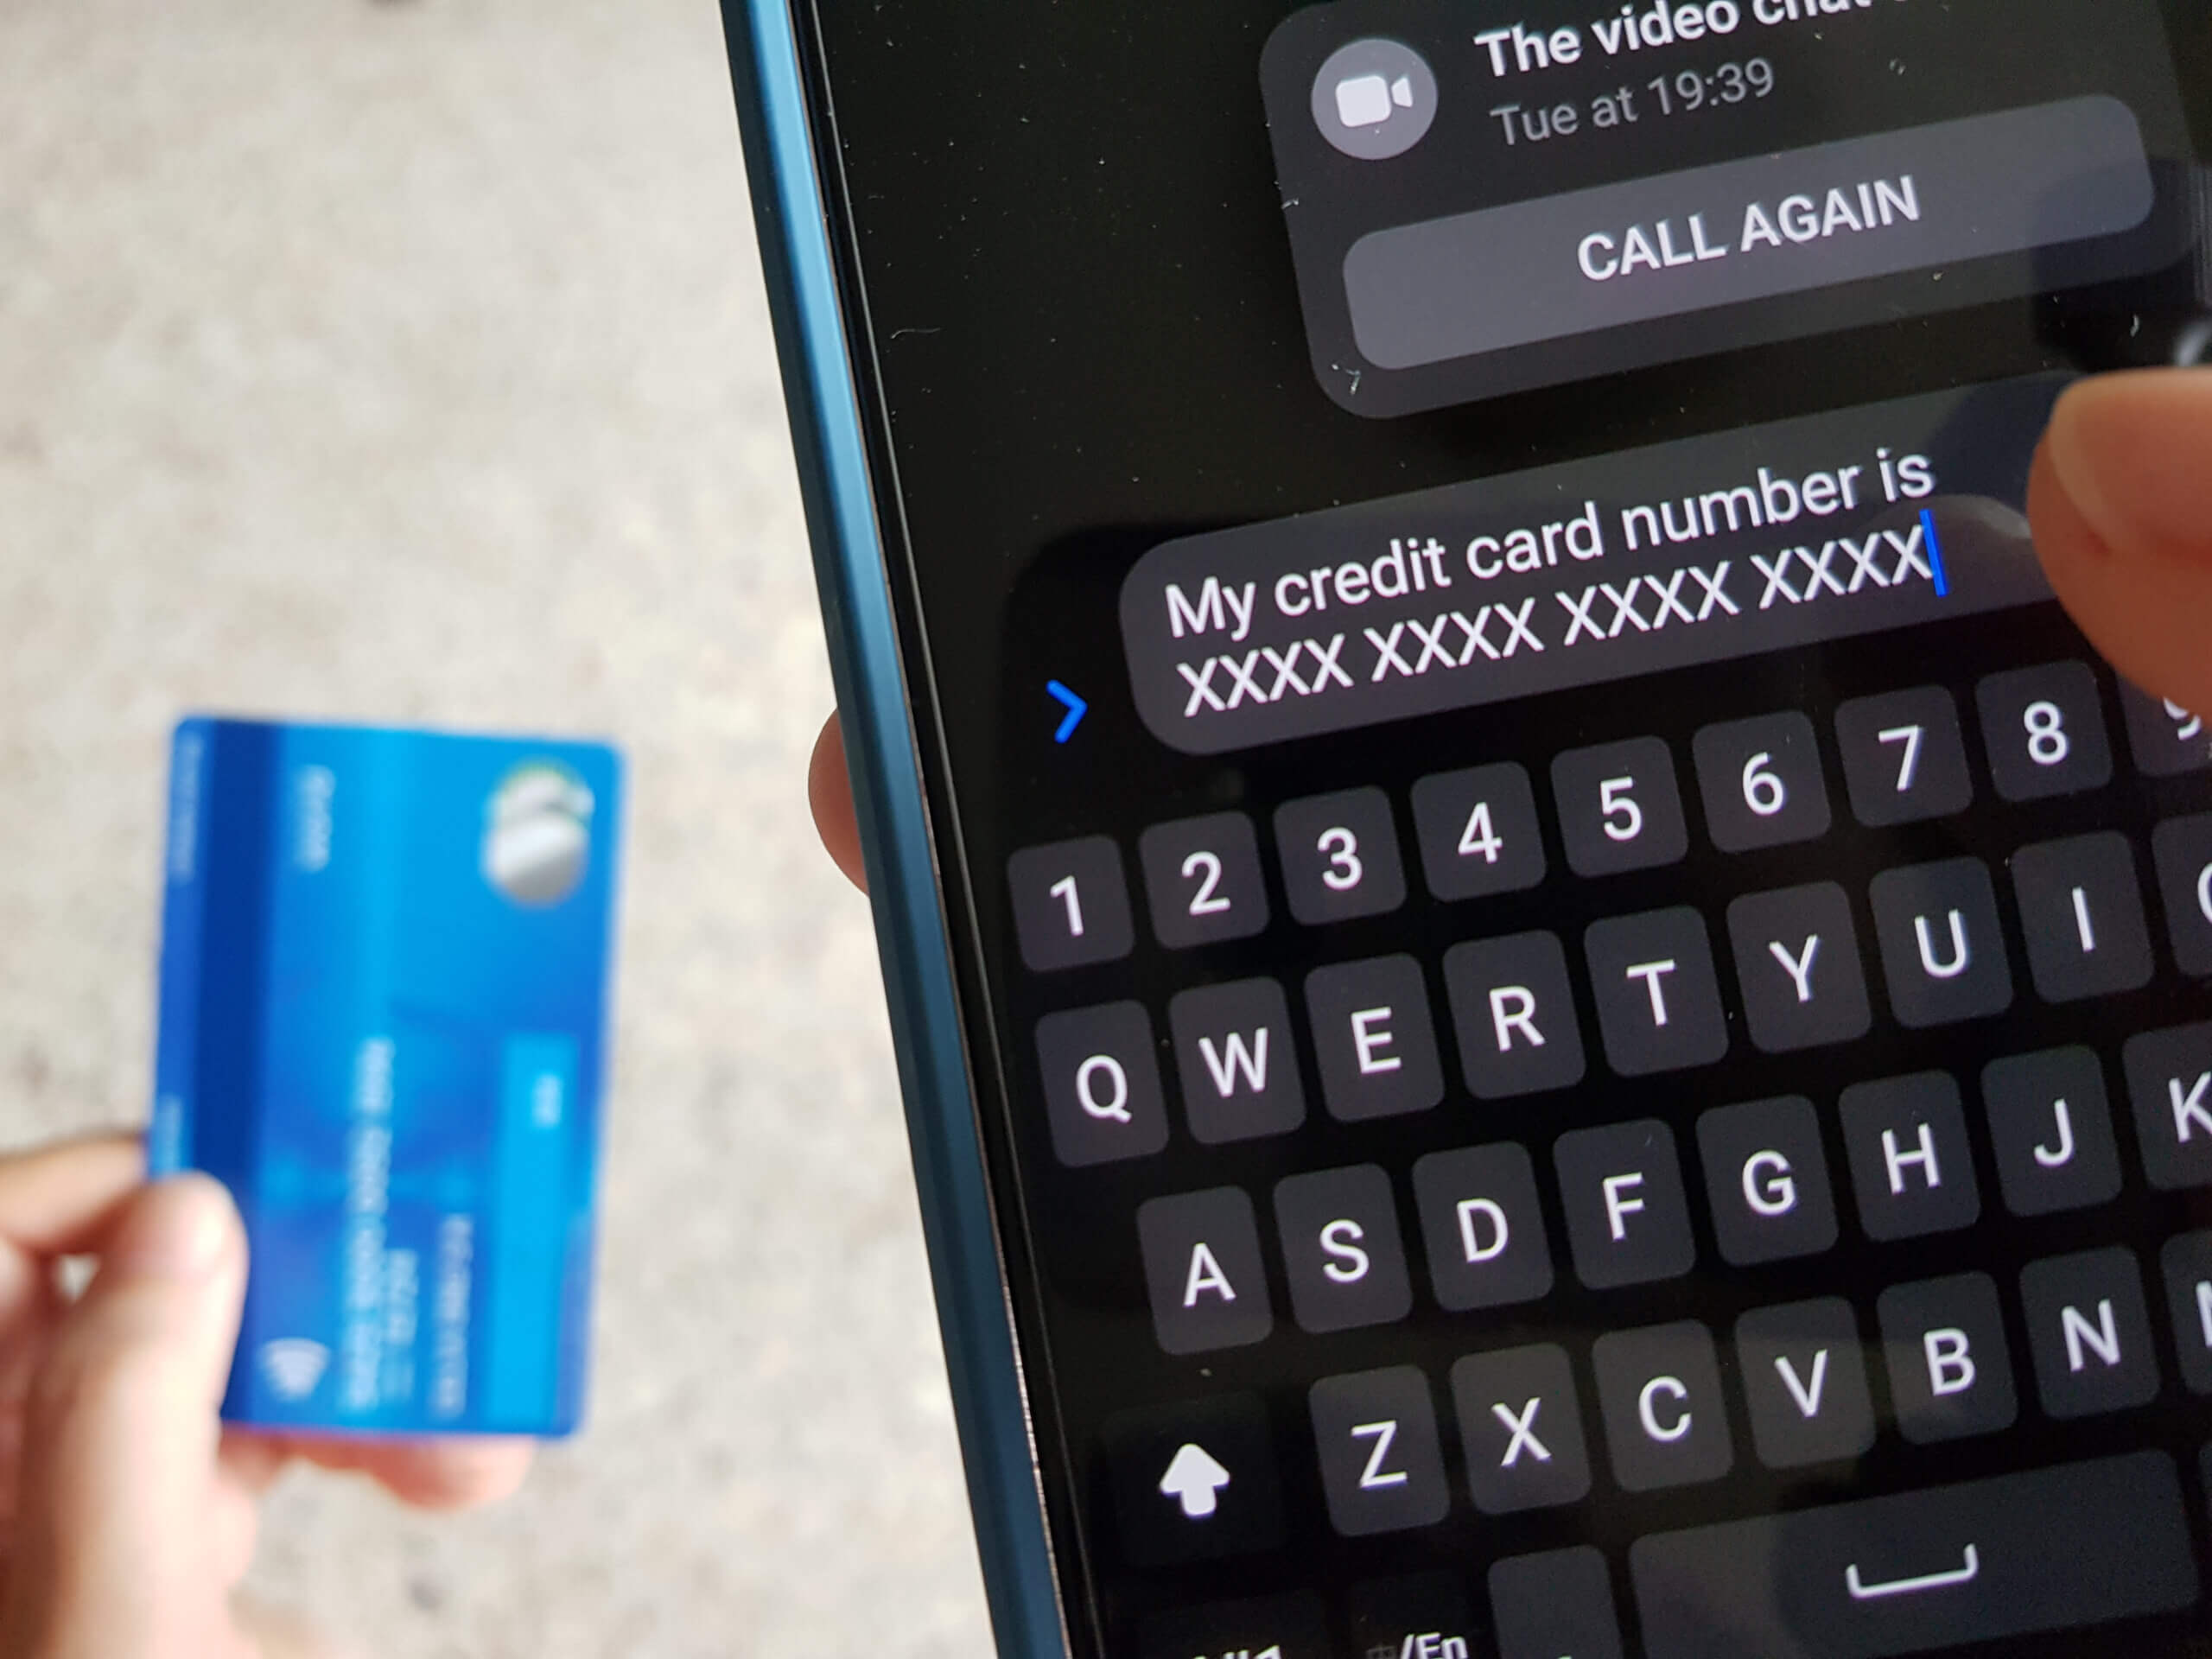 online scam victim sending credit card number to scammer